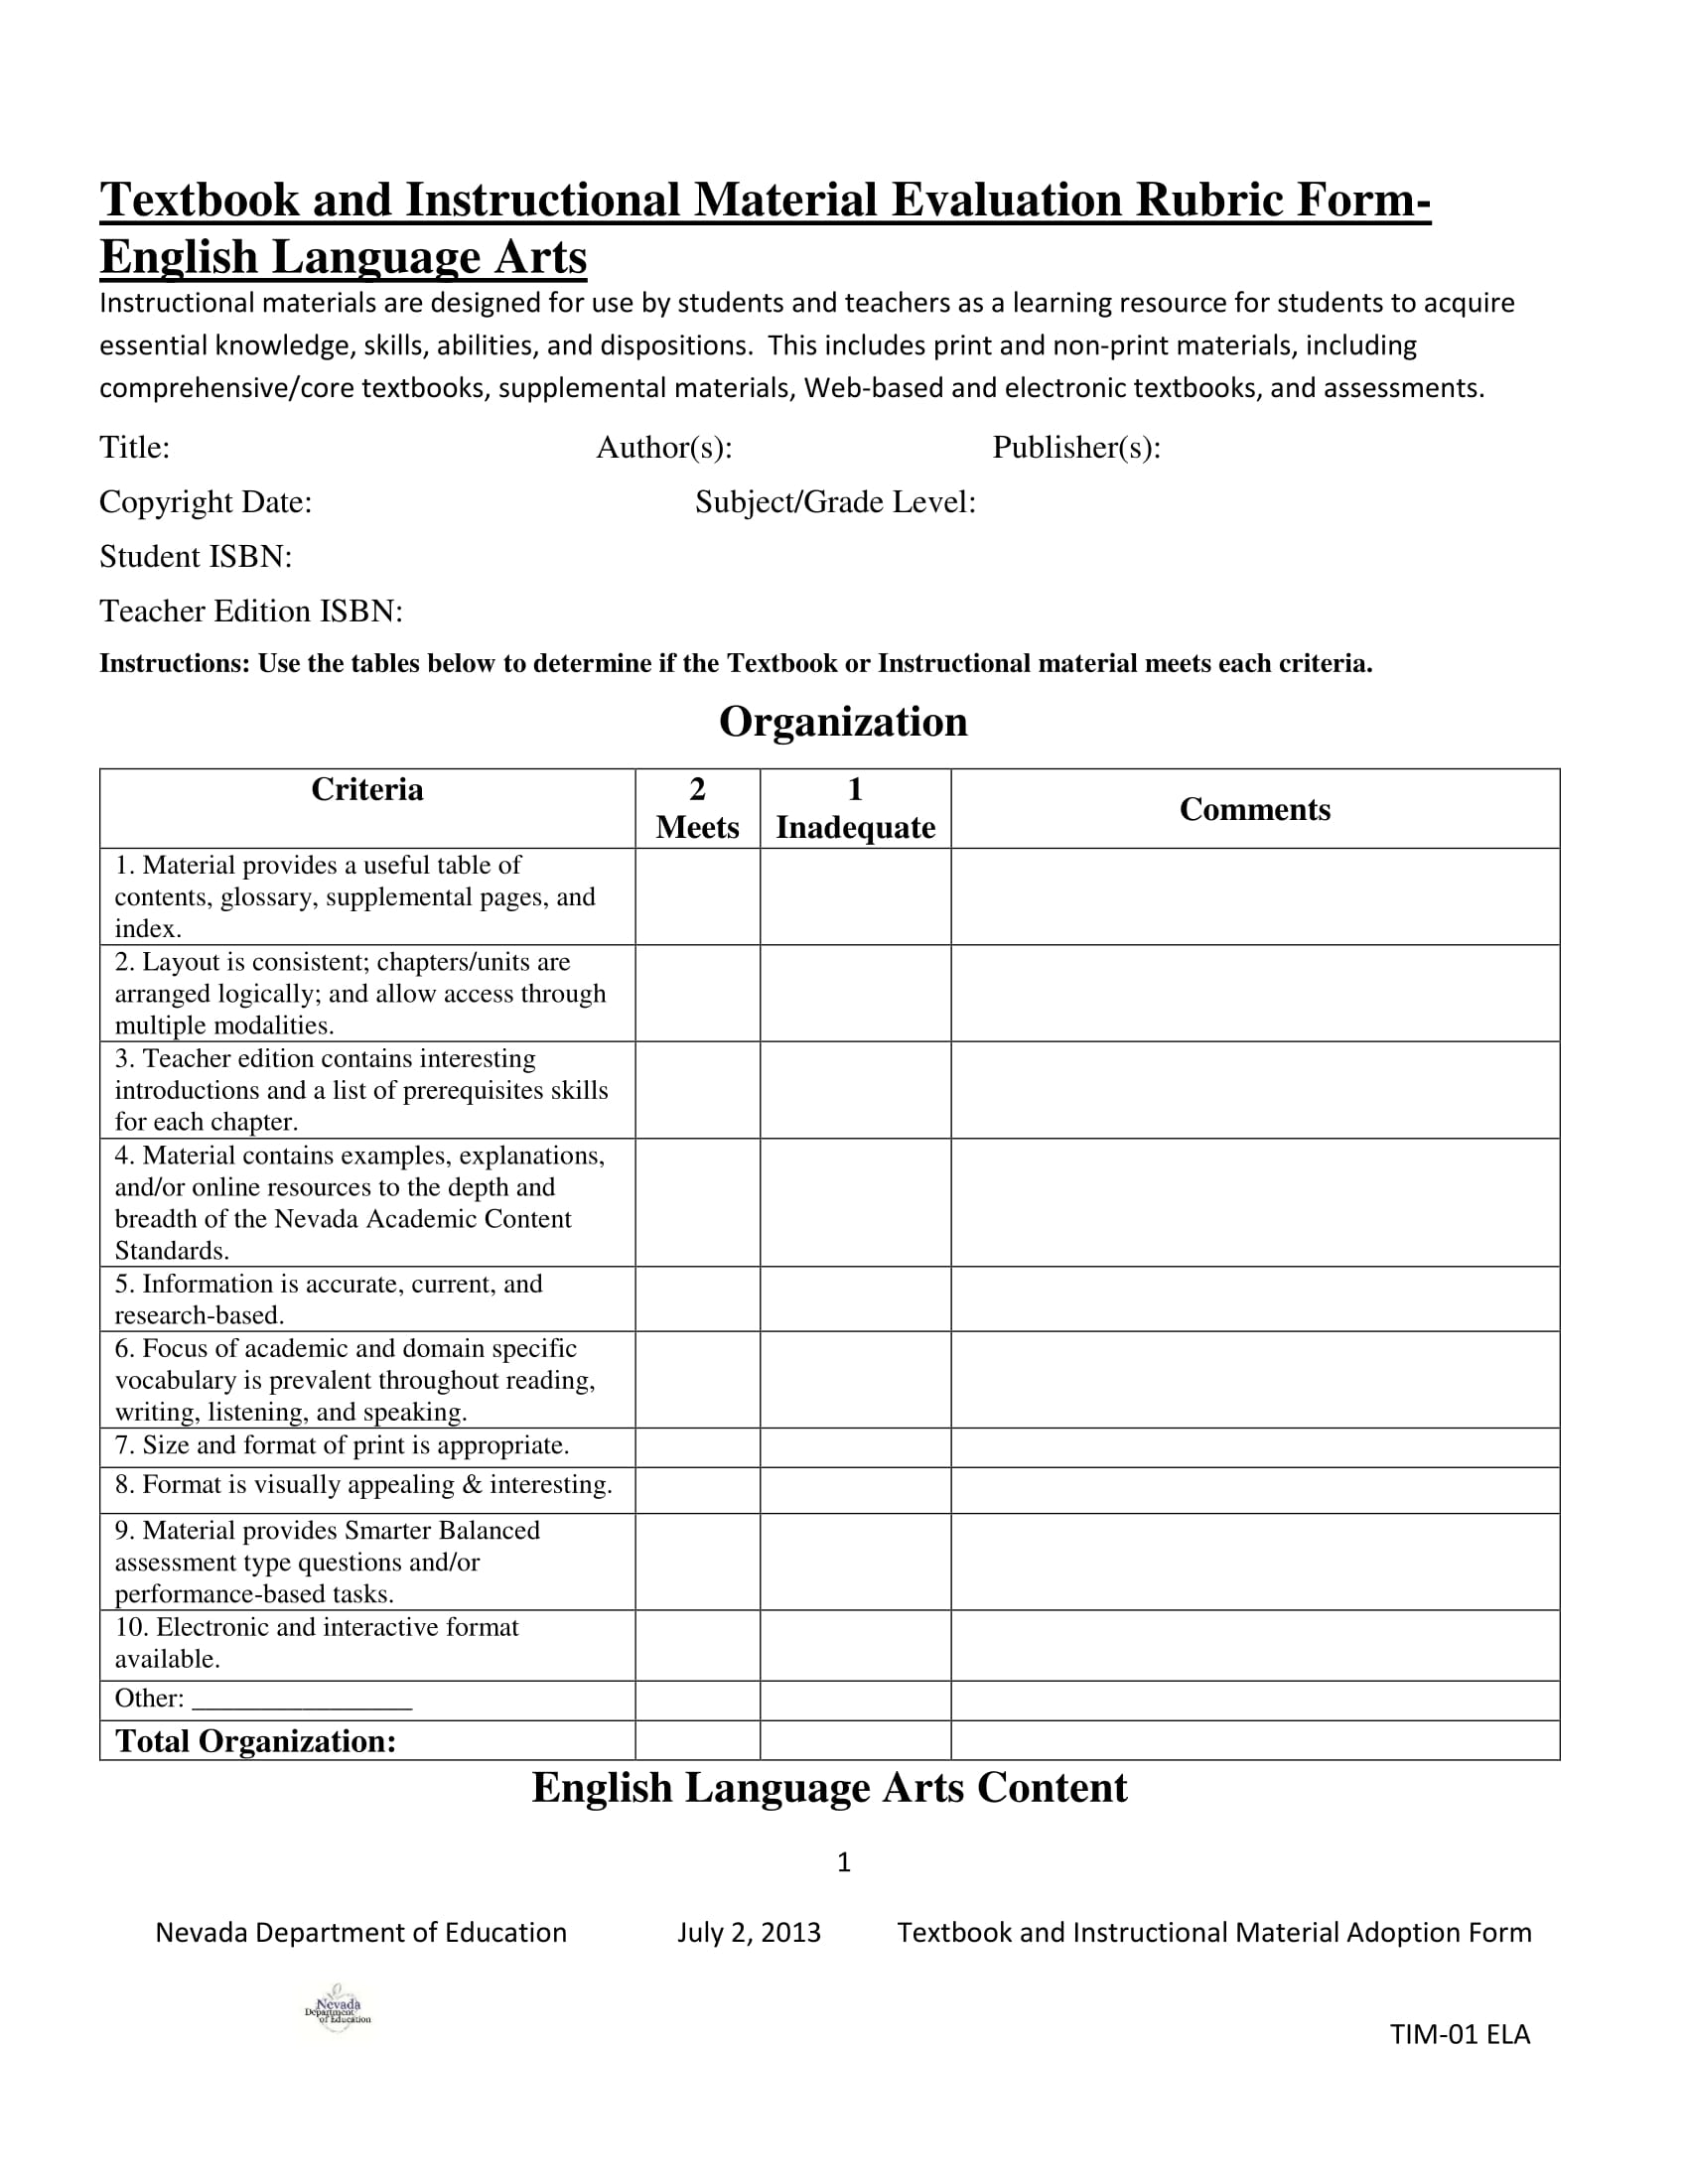 textbook evaluation rubric form 1